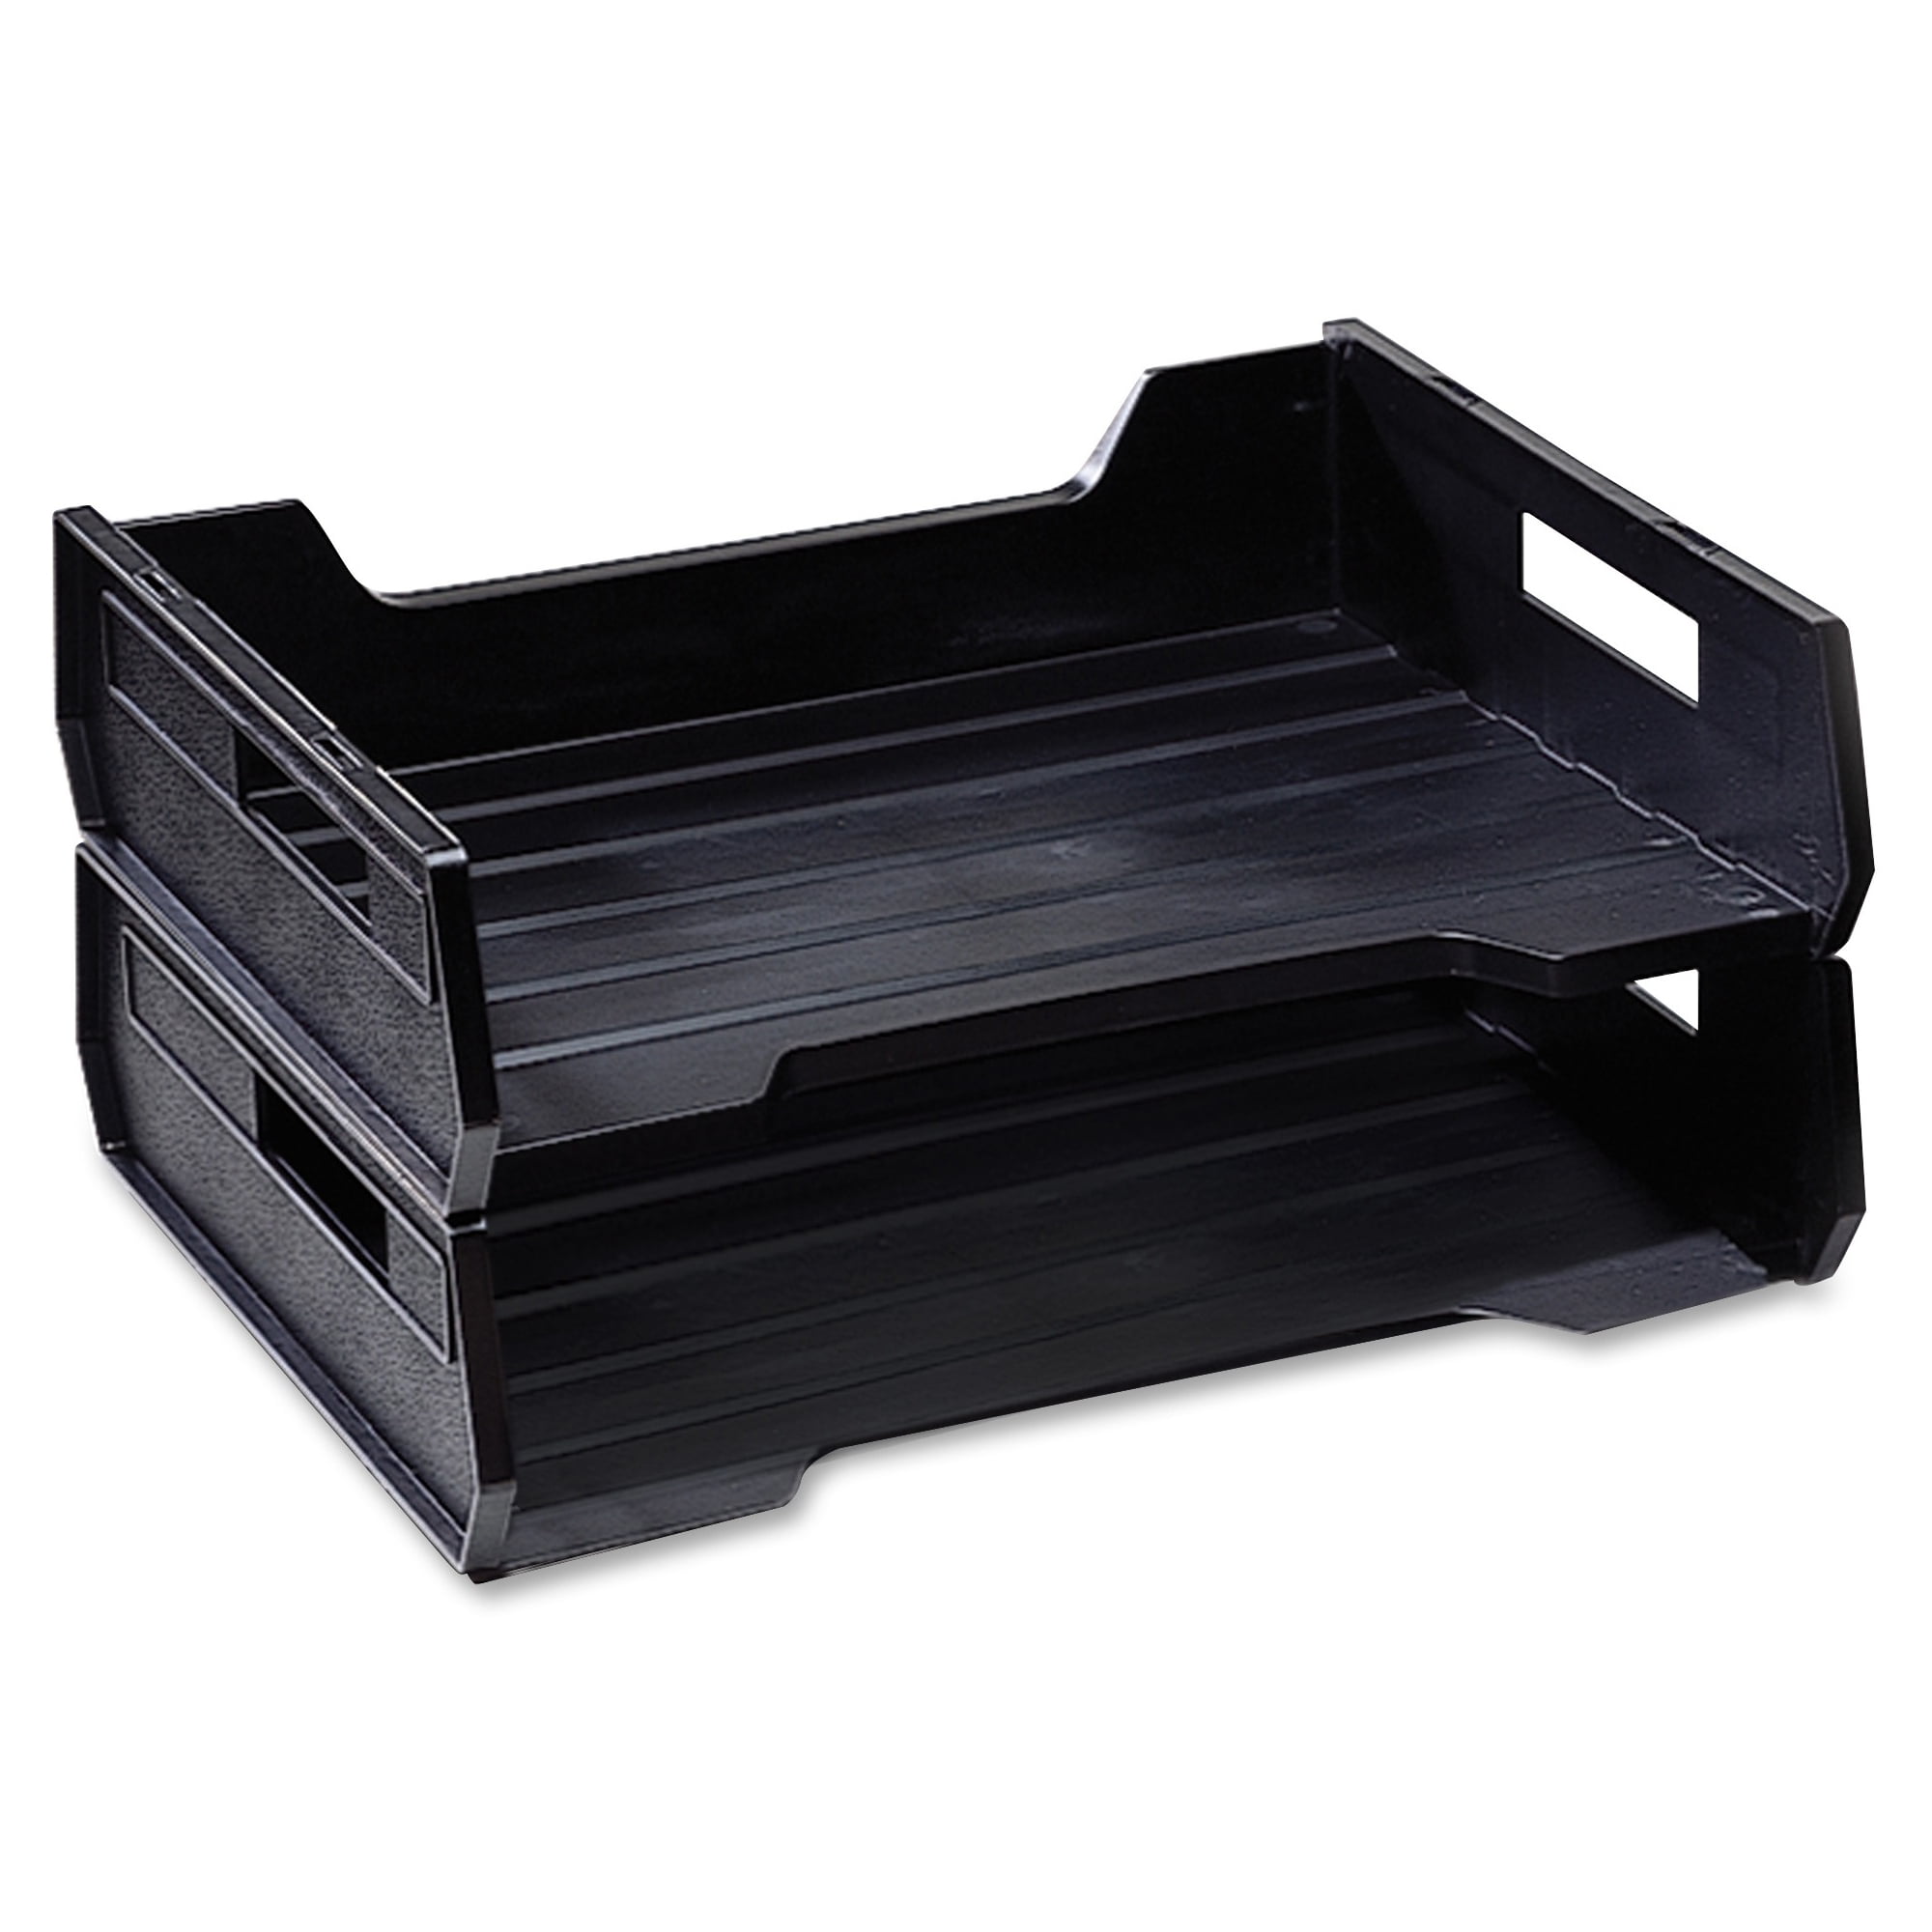 7520 01 094 4307 Skilcraft Letter Size Desk Tray Plastic Black